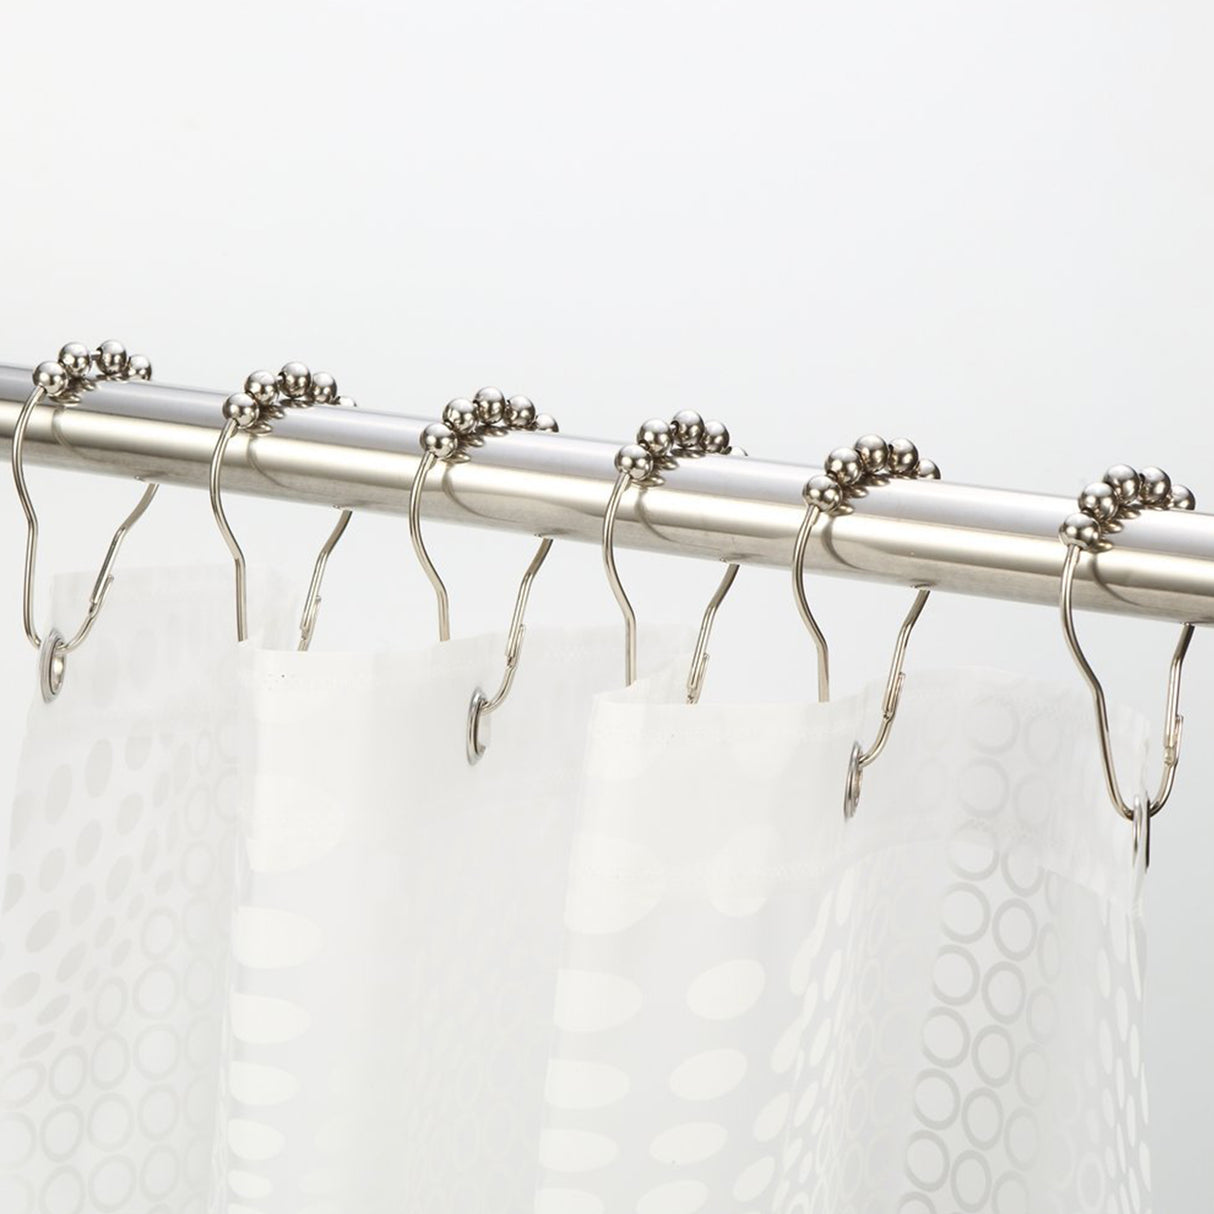 Bath, Feather Shower Curtain Hooks